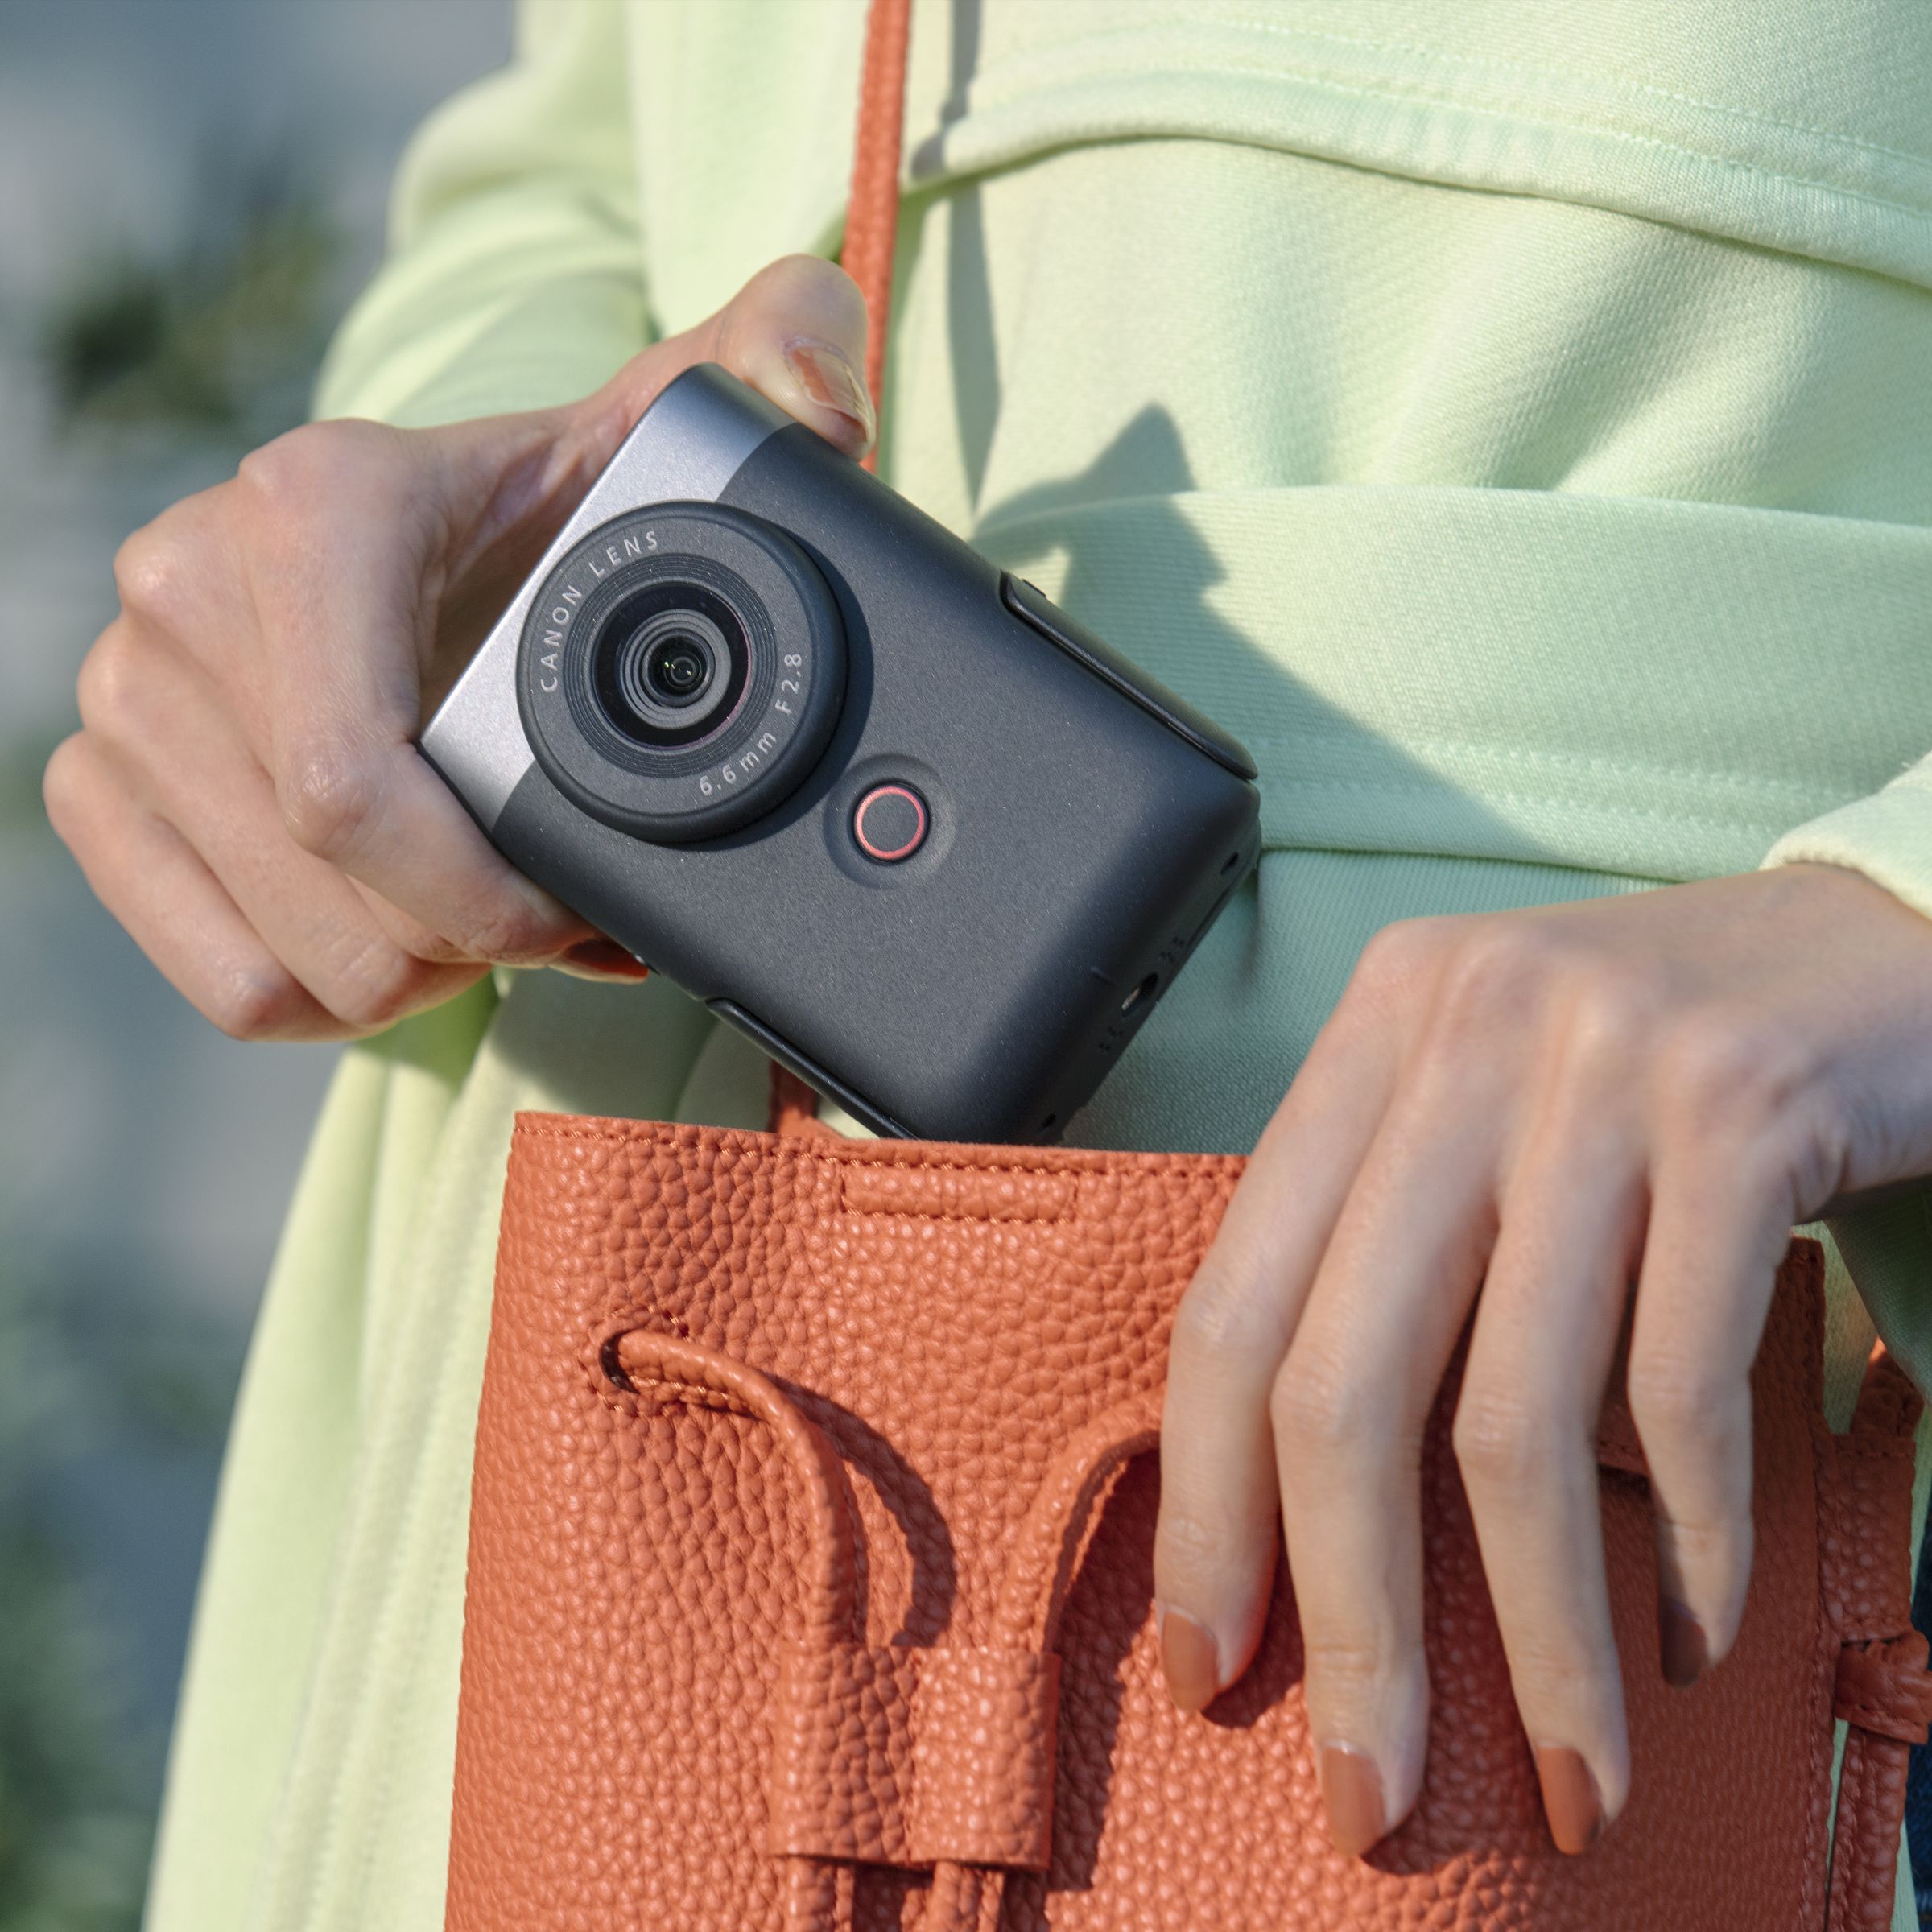 A person removing the Canon PowerShot V10 vlogging camera from an orange handbag.